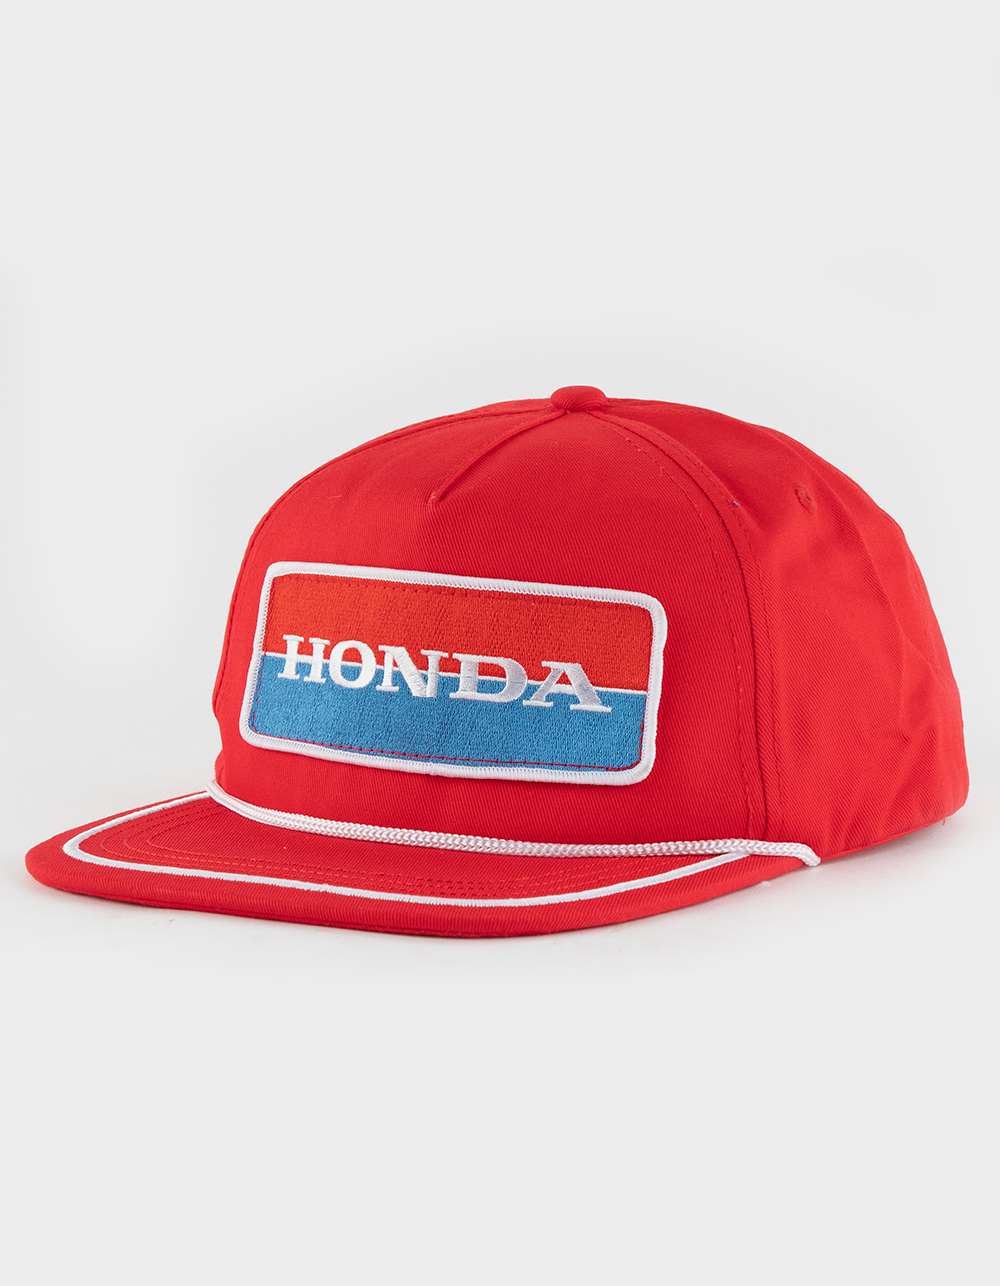 HONDA Ace Mens Snapback Hat